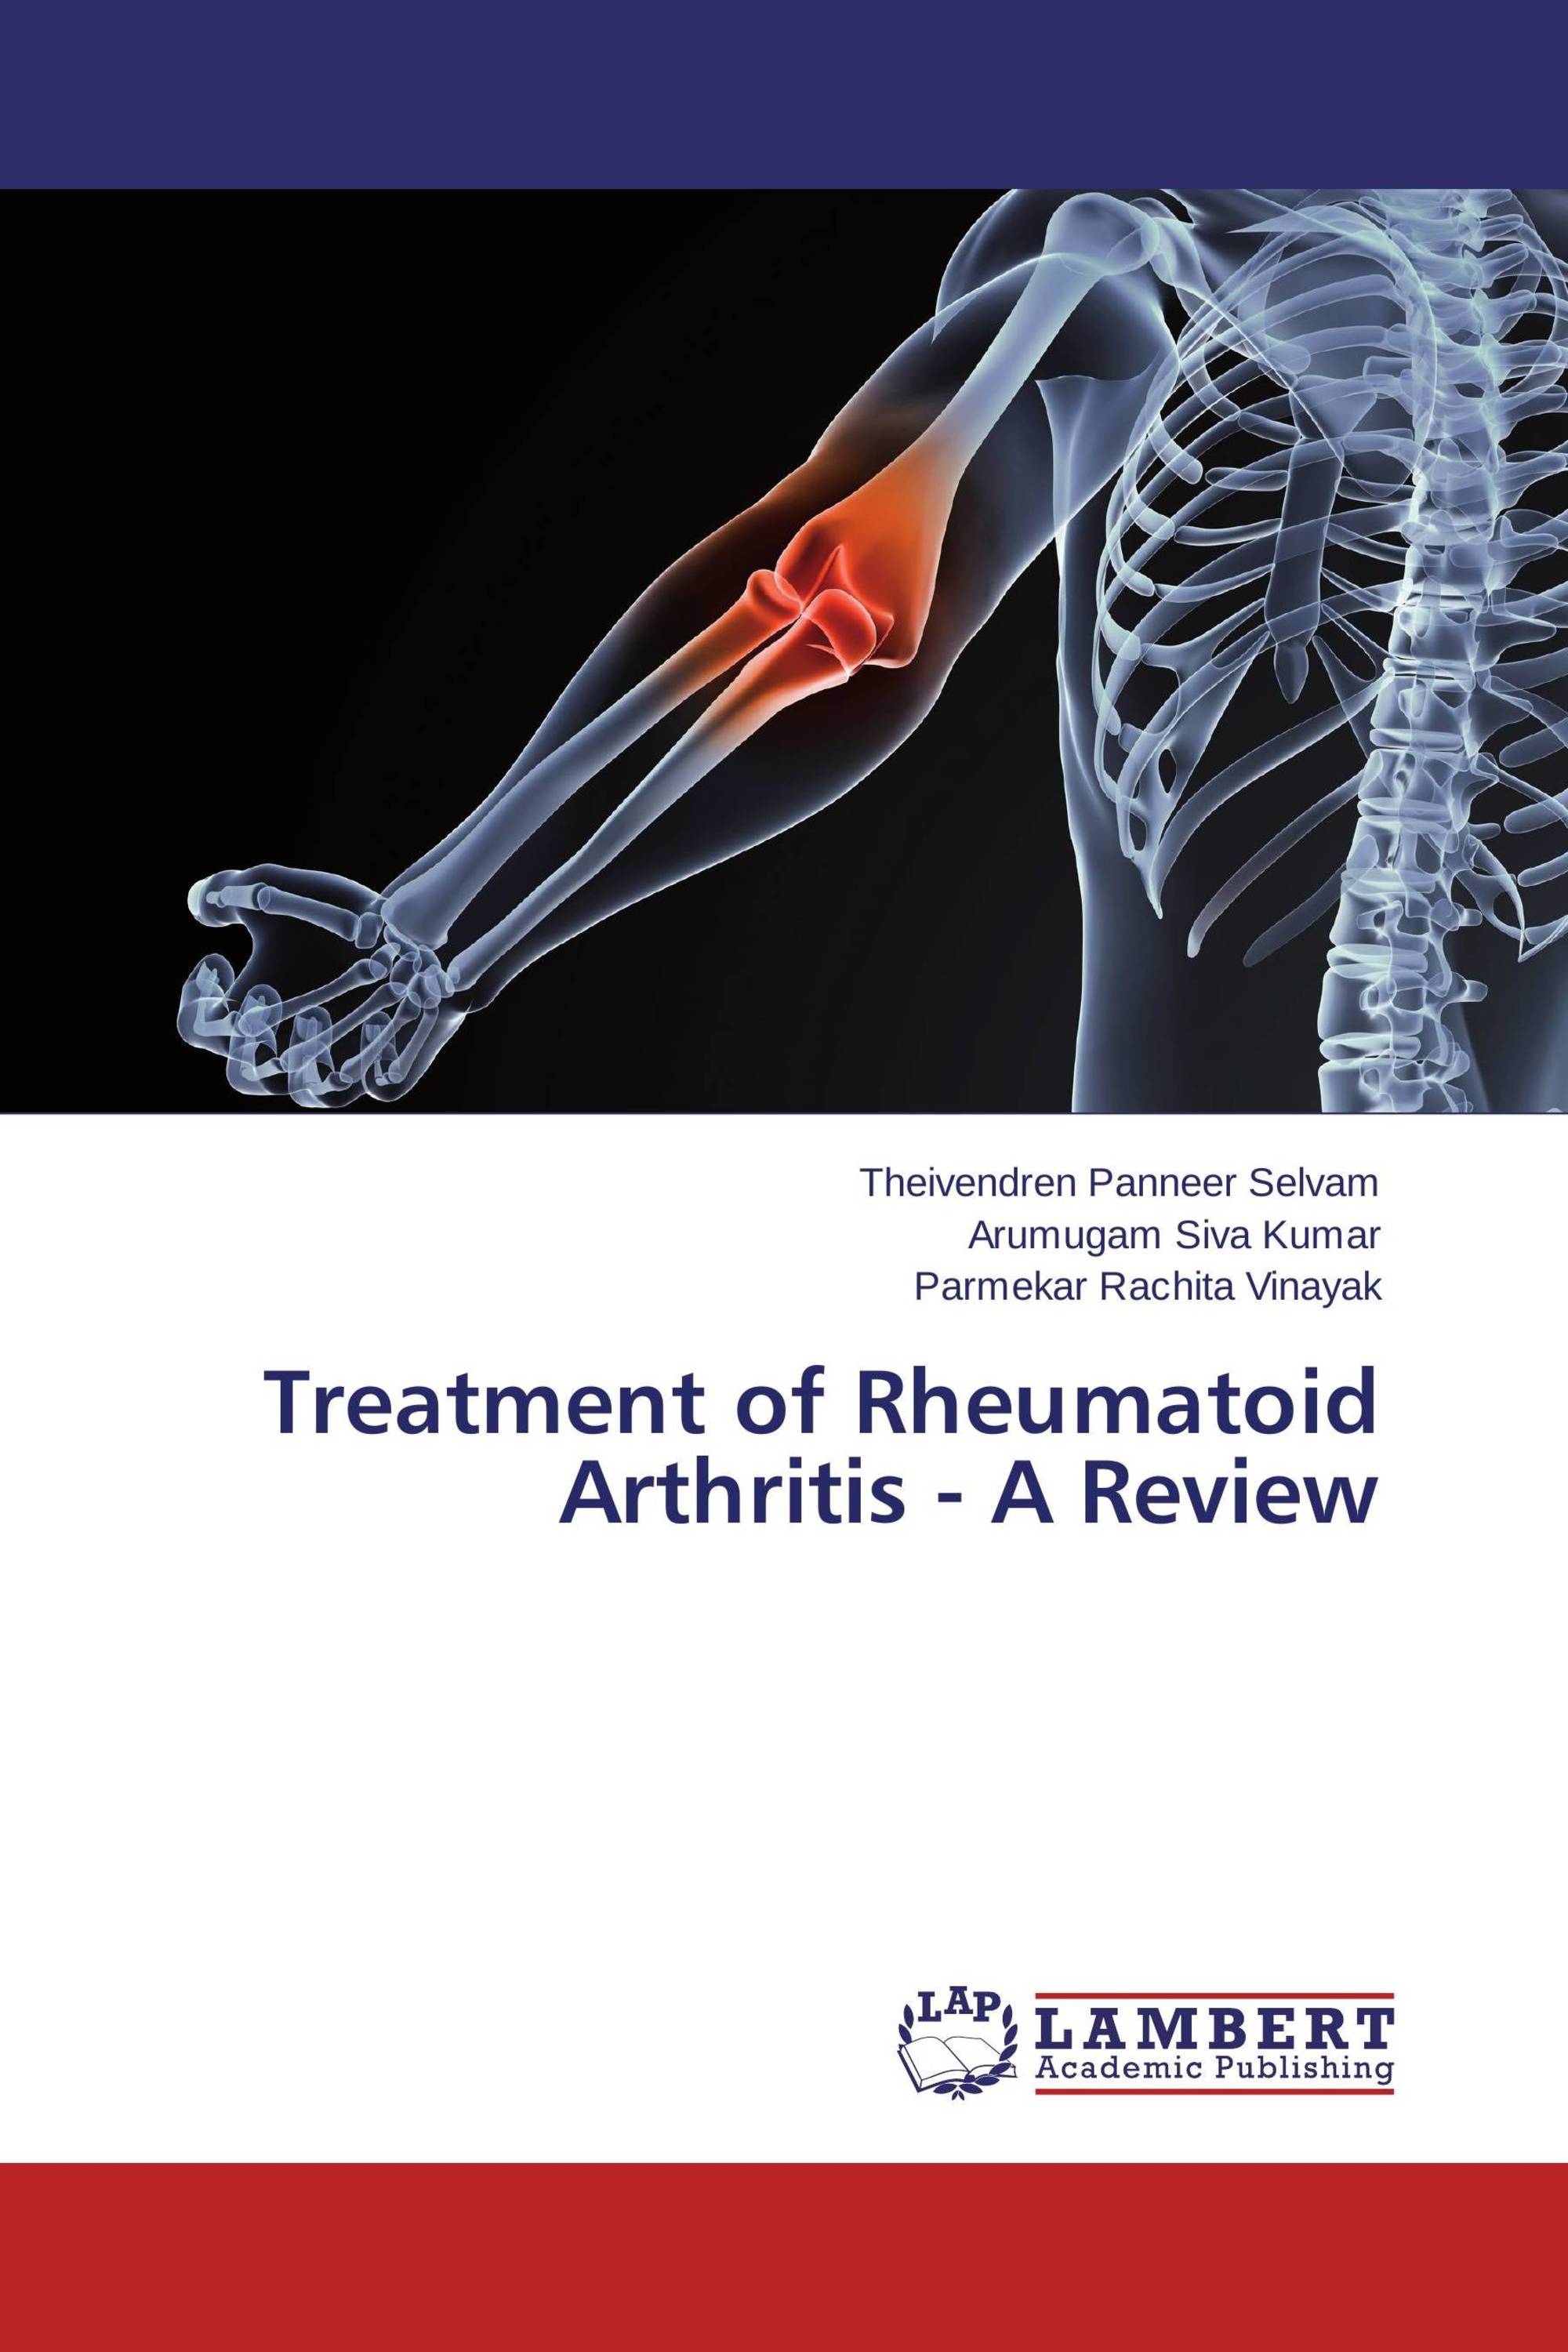 literature review of rheumatoid arthritis treatment